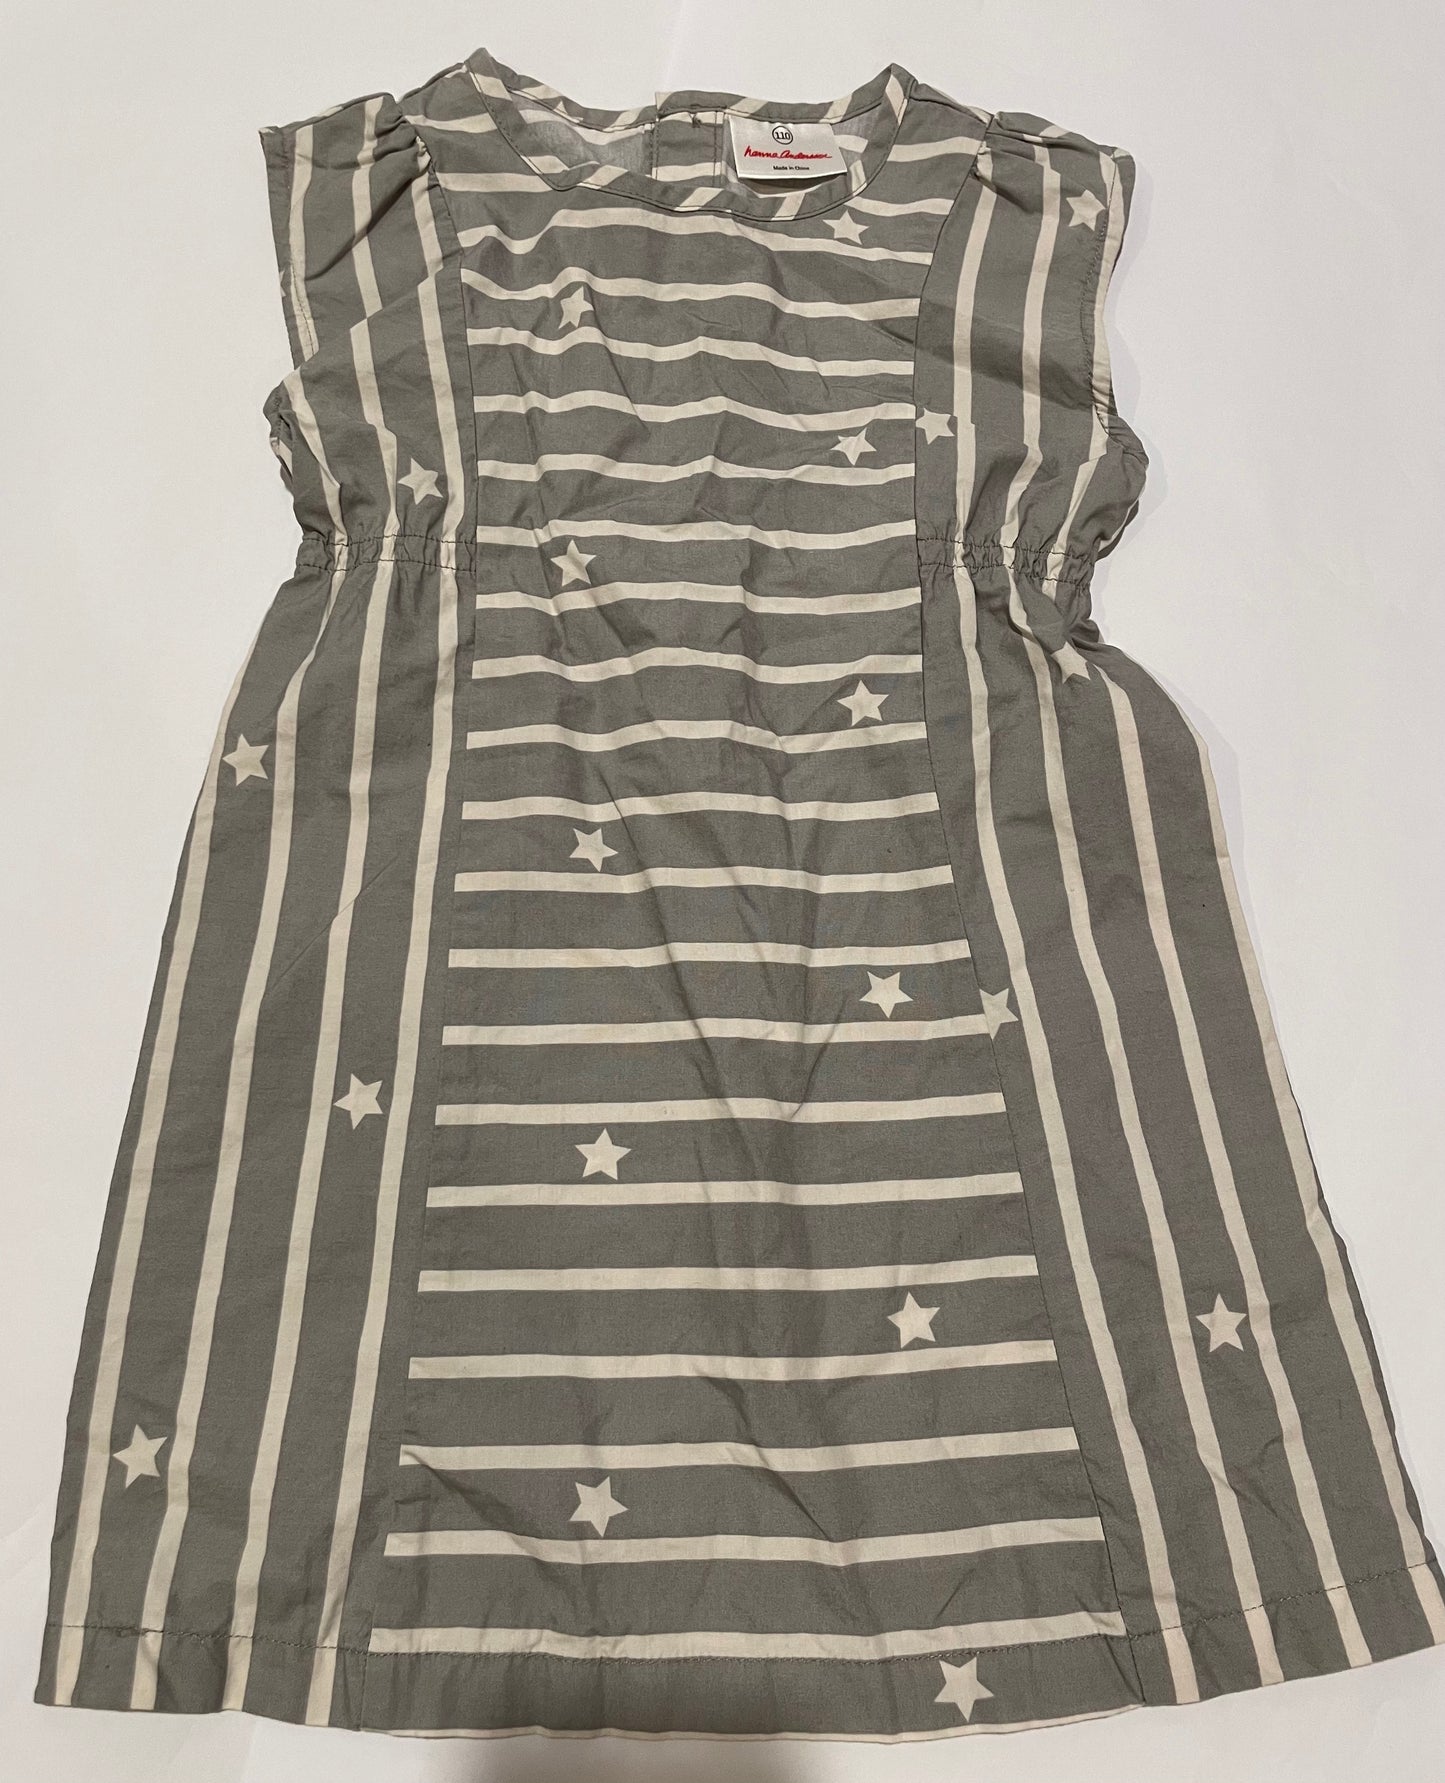 Hanna Andersson Girls Grey stripes/star Dress Size 110 (5T) - EUC